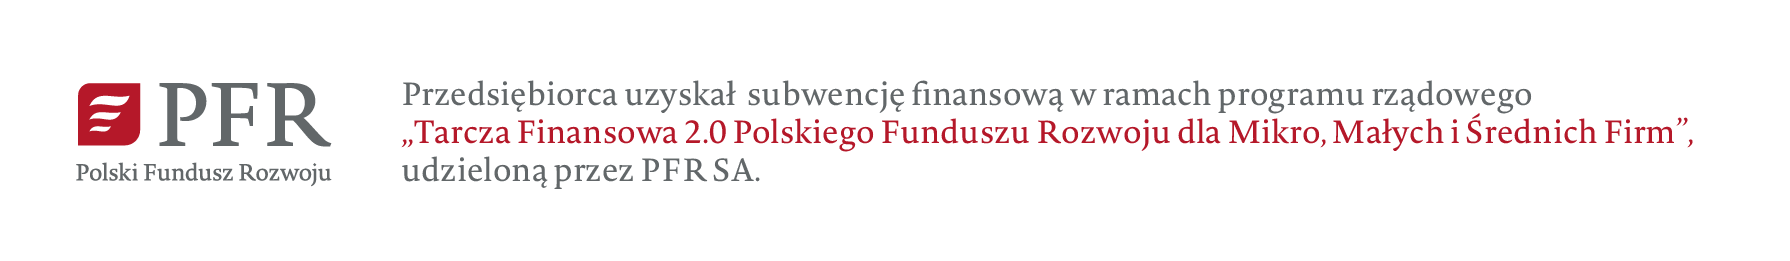 plakat Polski Fundusz Rozwoju PFR